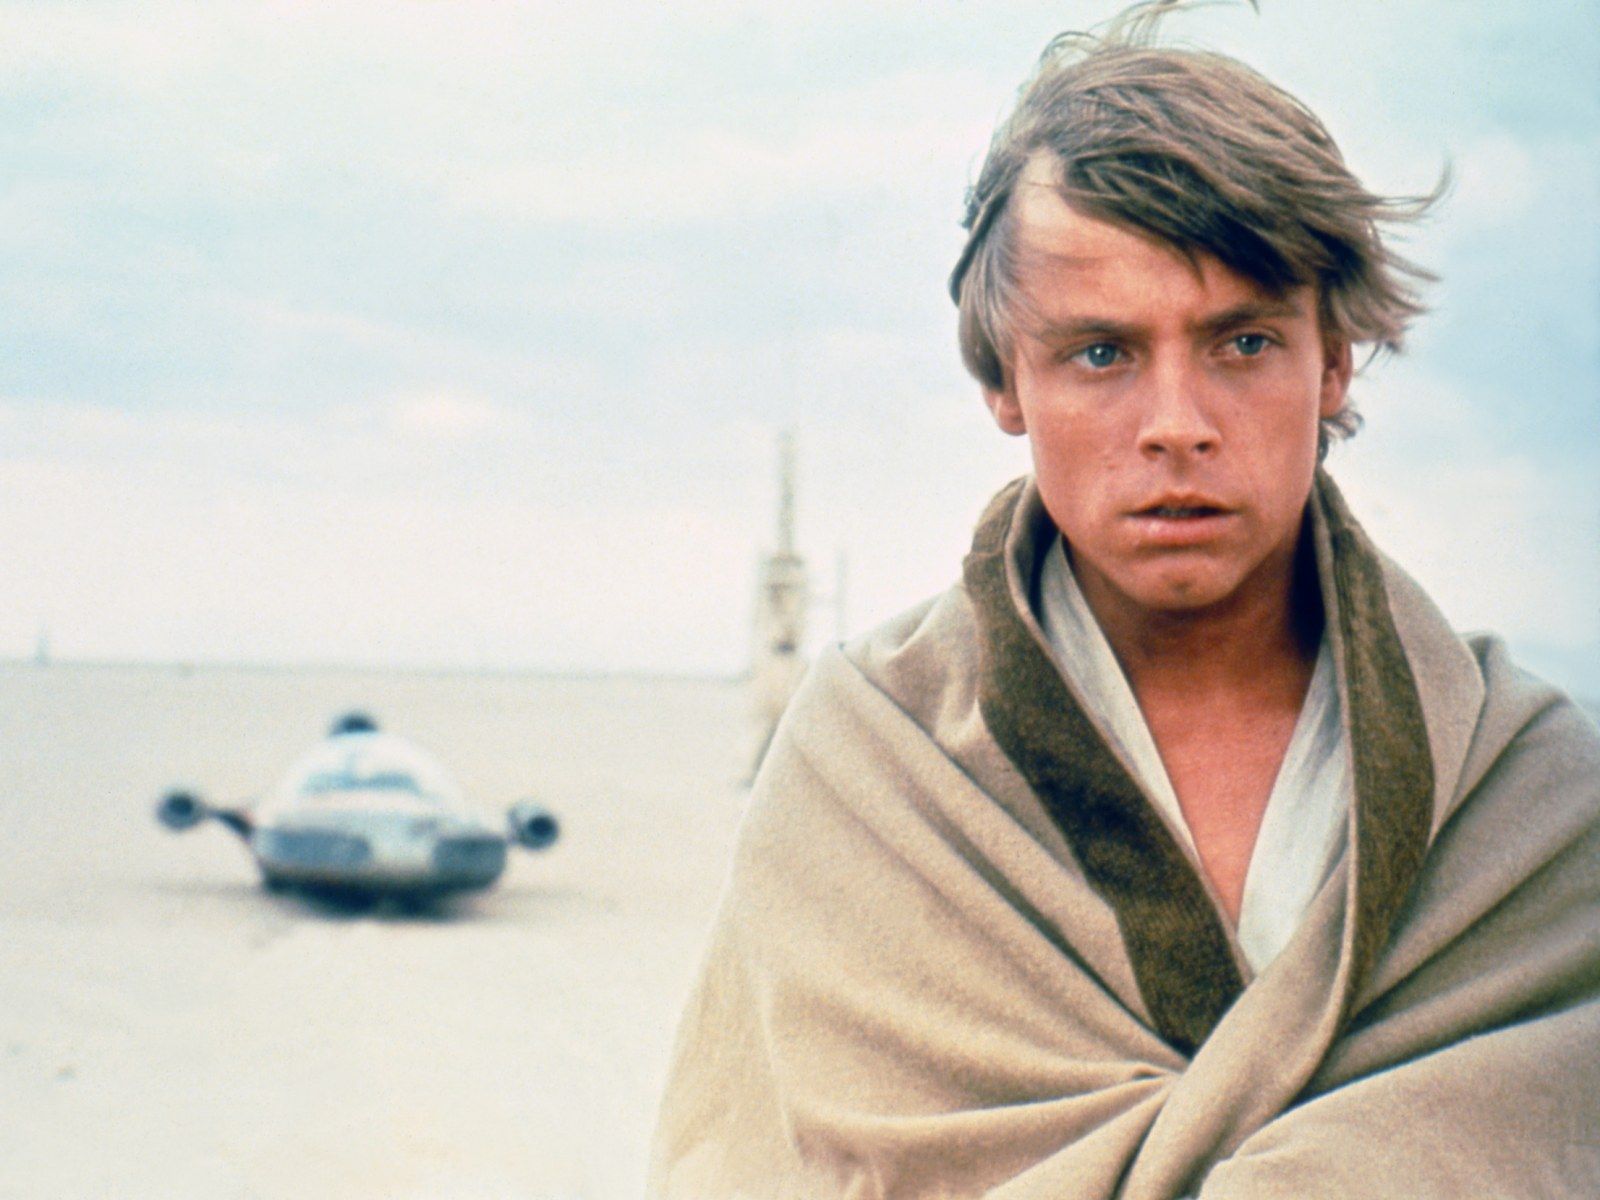 Ever Wondered What a Female Luke Skywalker Would Look Like? Wonder No More